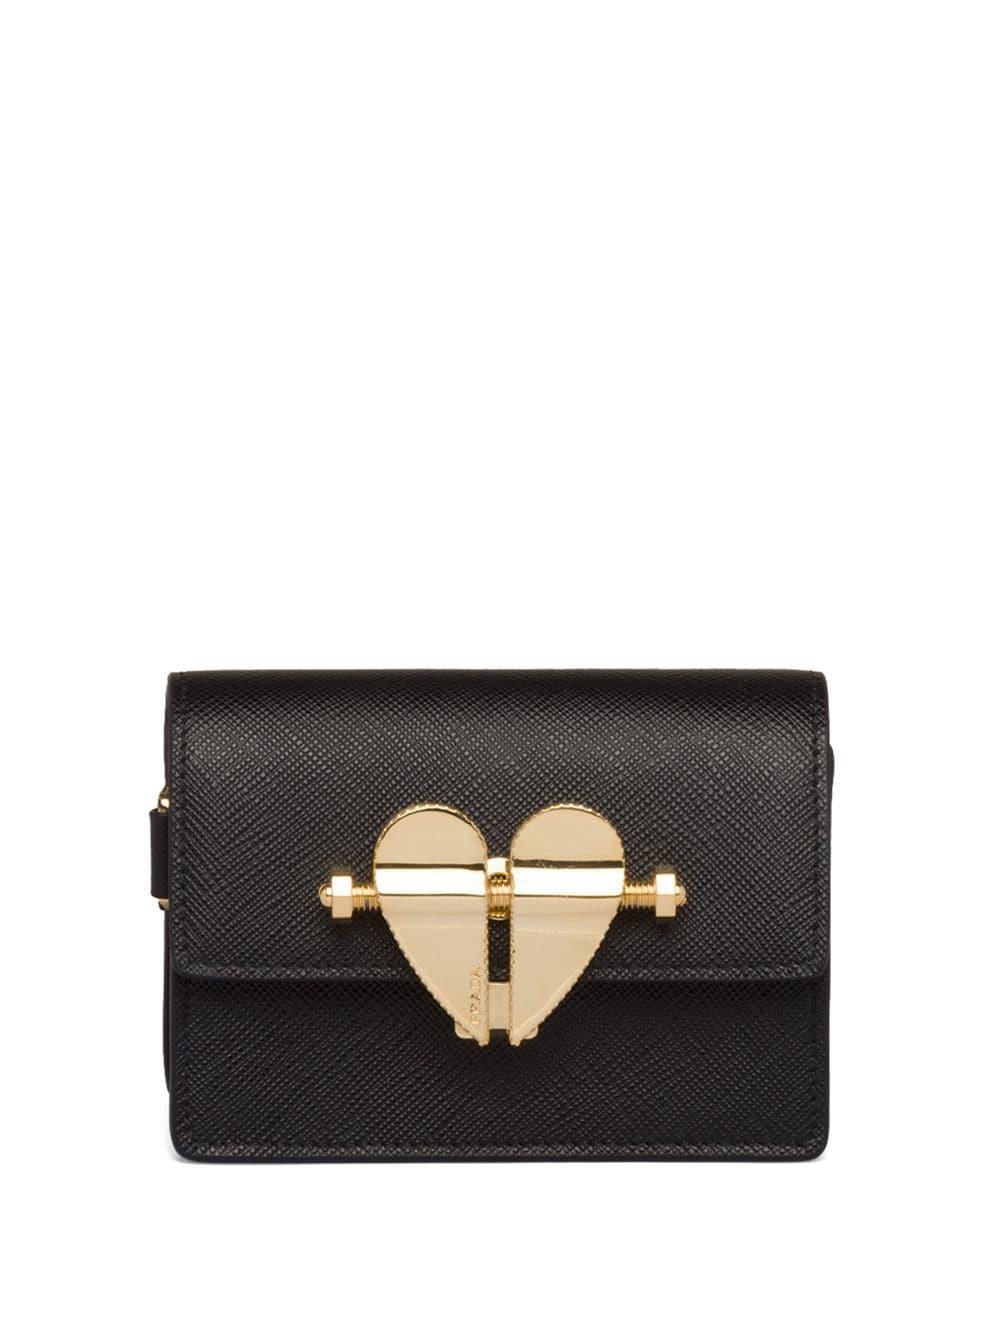 Prada Leather Heart Clasp Mini Bag in Black - Lyst